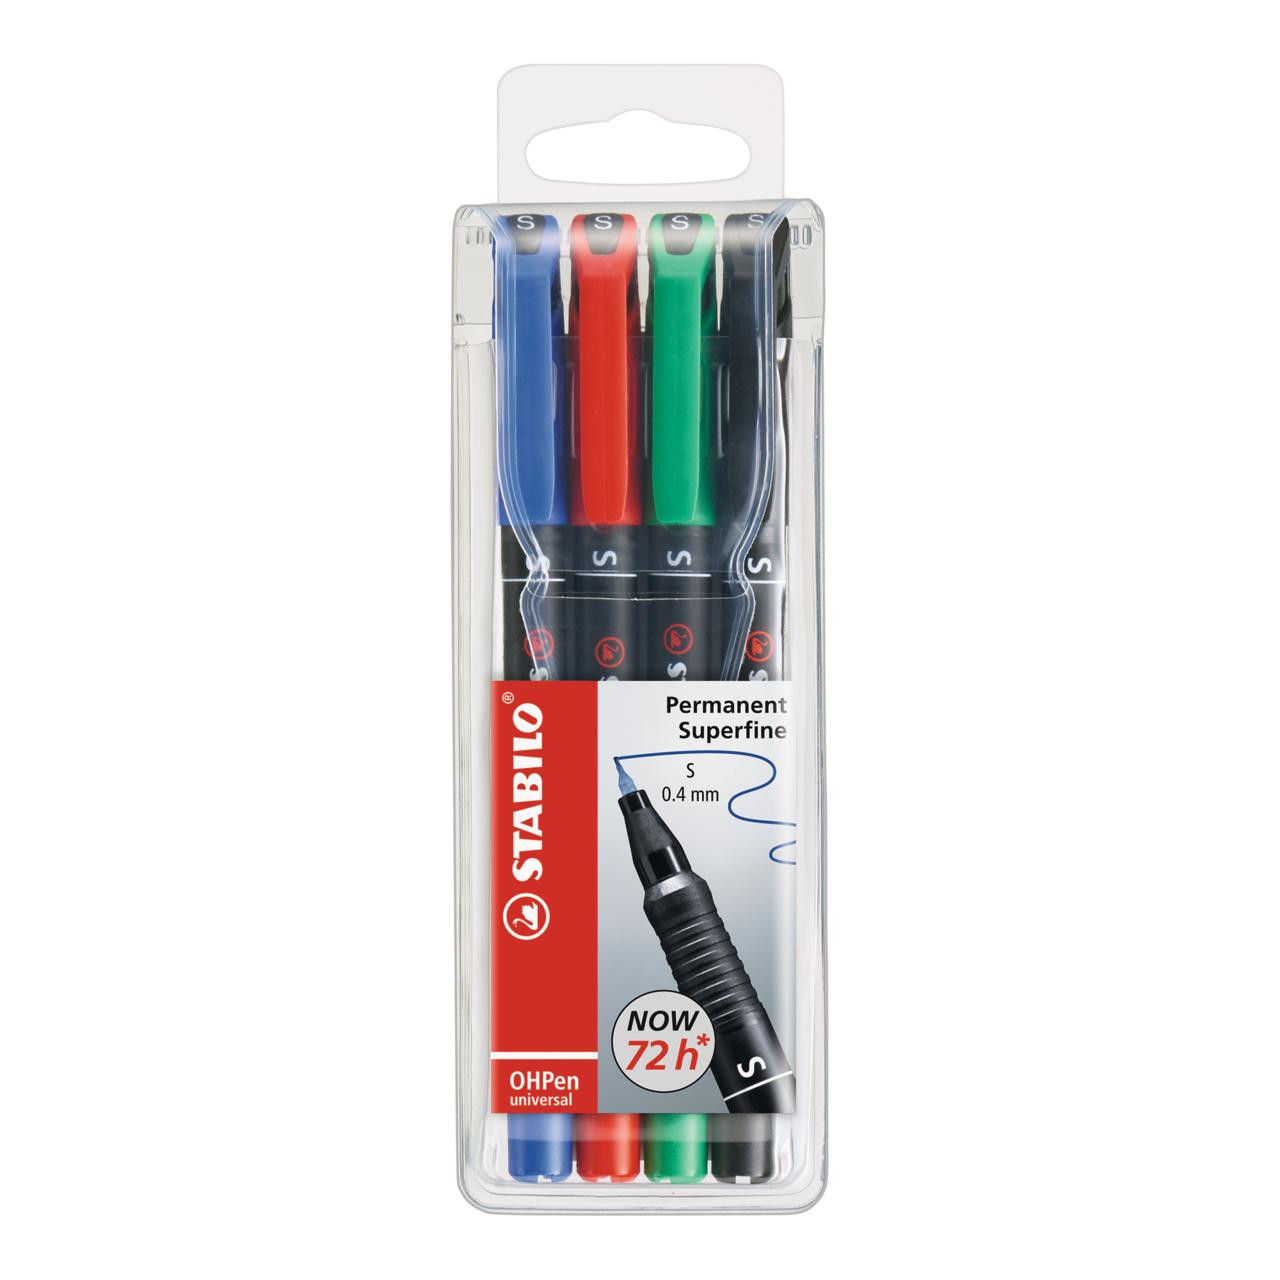 Stabillo OHPen Universal Pen - 4 Color Set - 4mm Permanent - Sam Flax  Atlanta